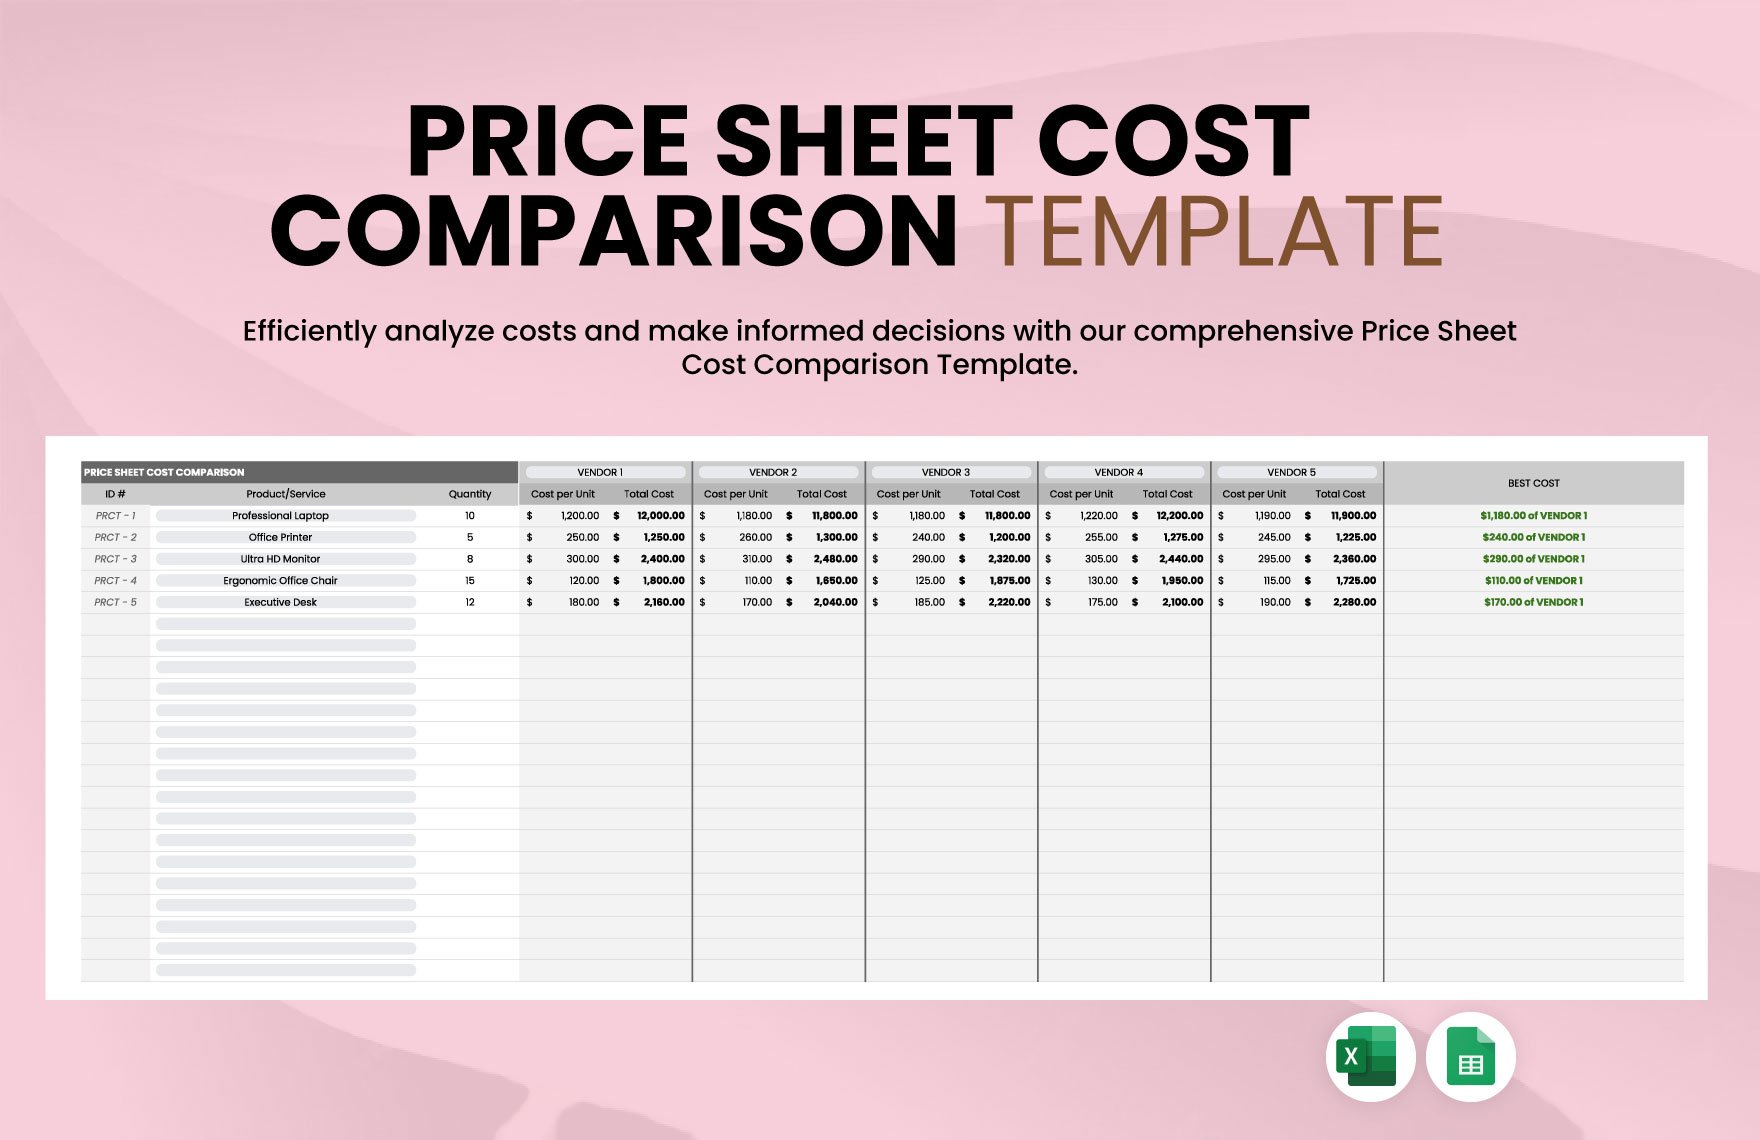 Price Sheet Cost Comparison Template